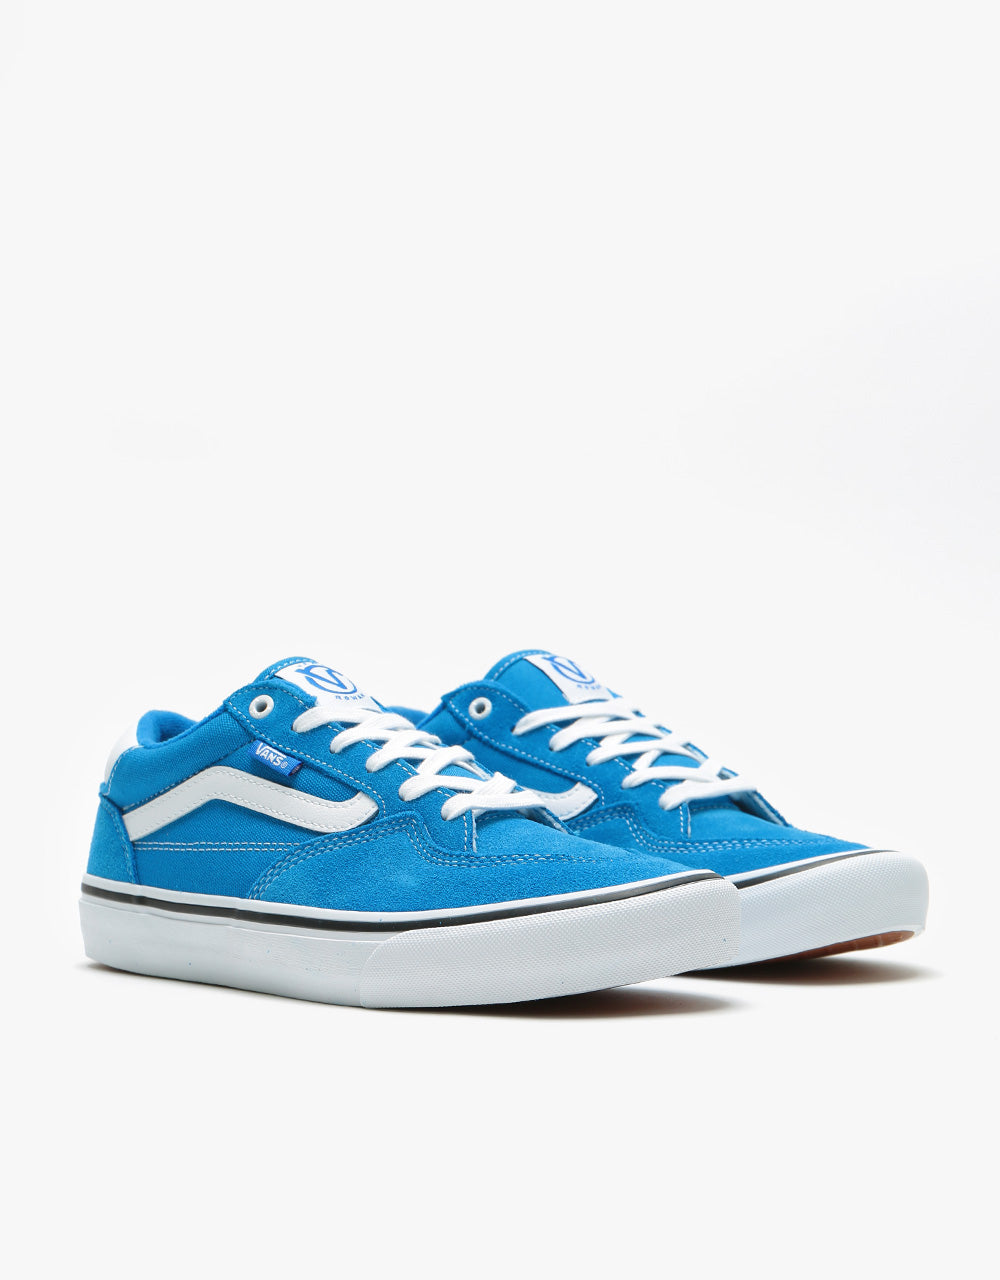 Vans Rowan Pro Skate Shoes - Director Blue